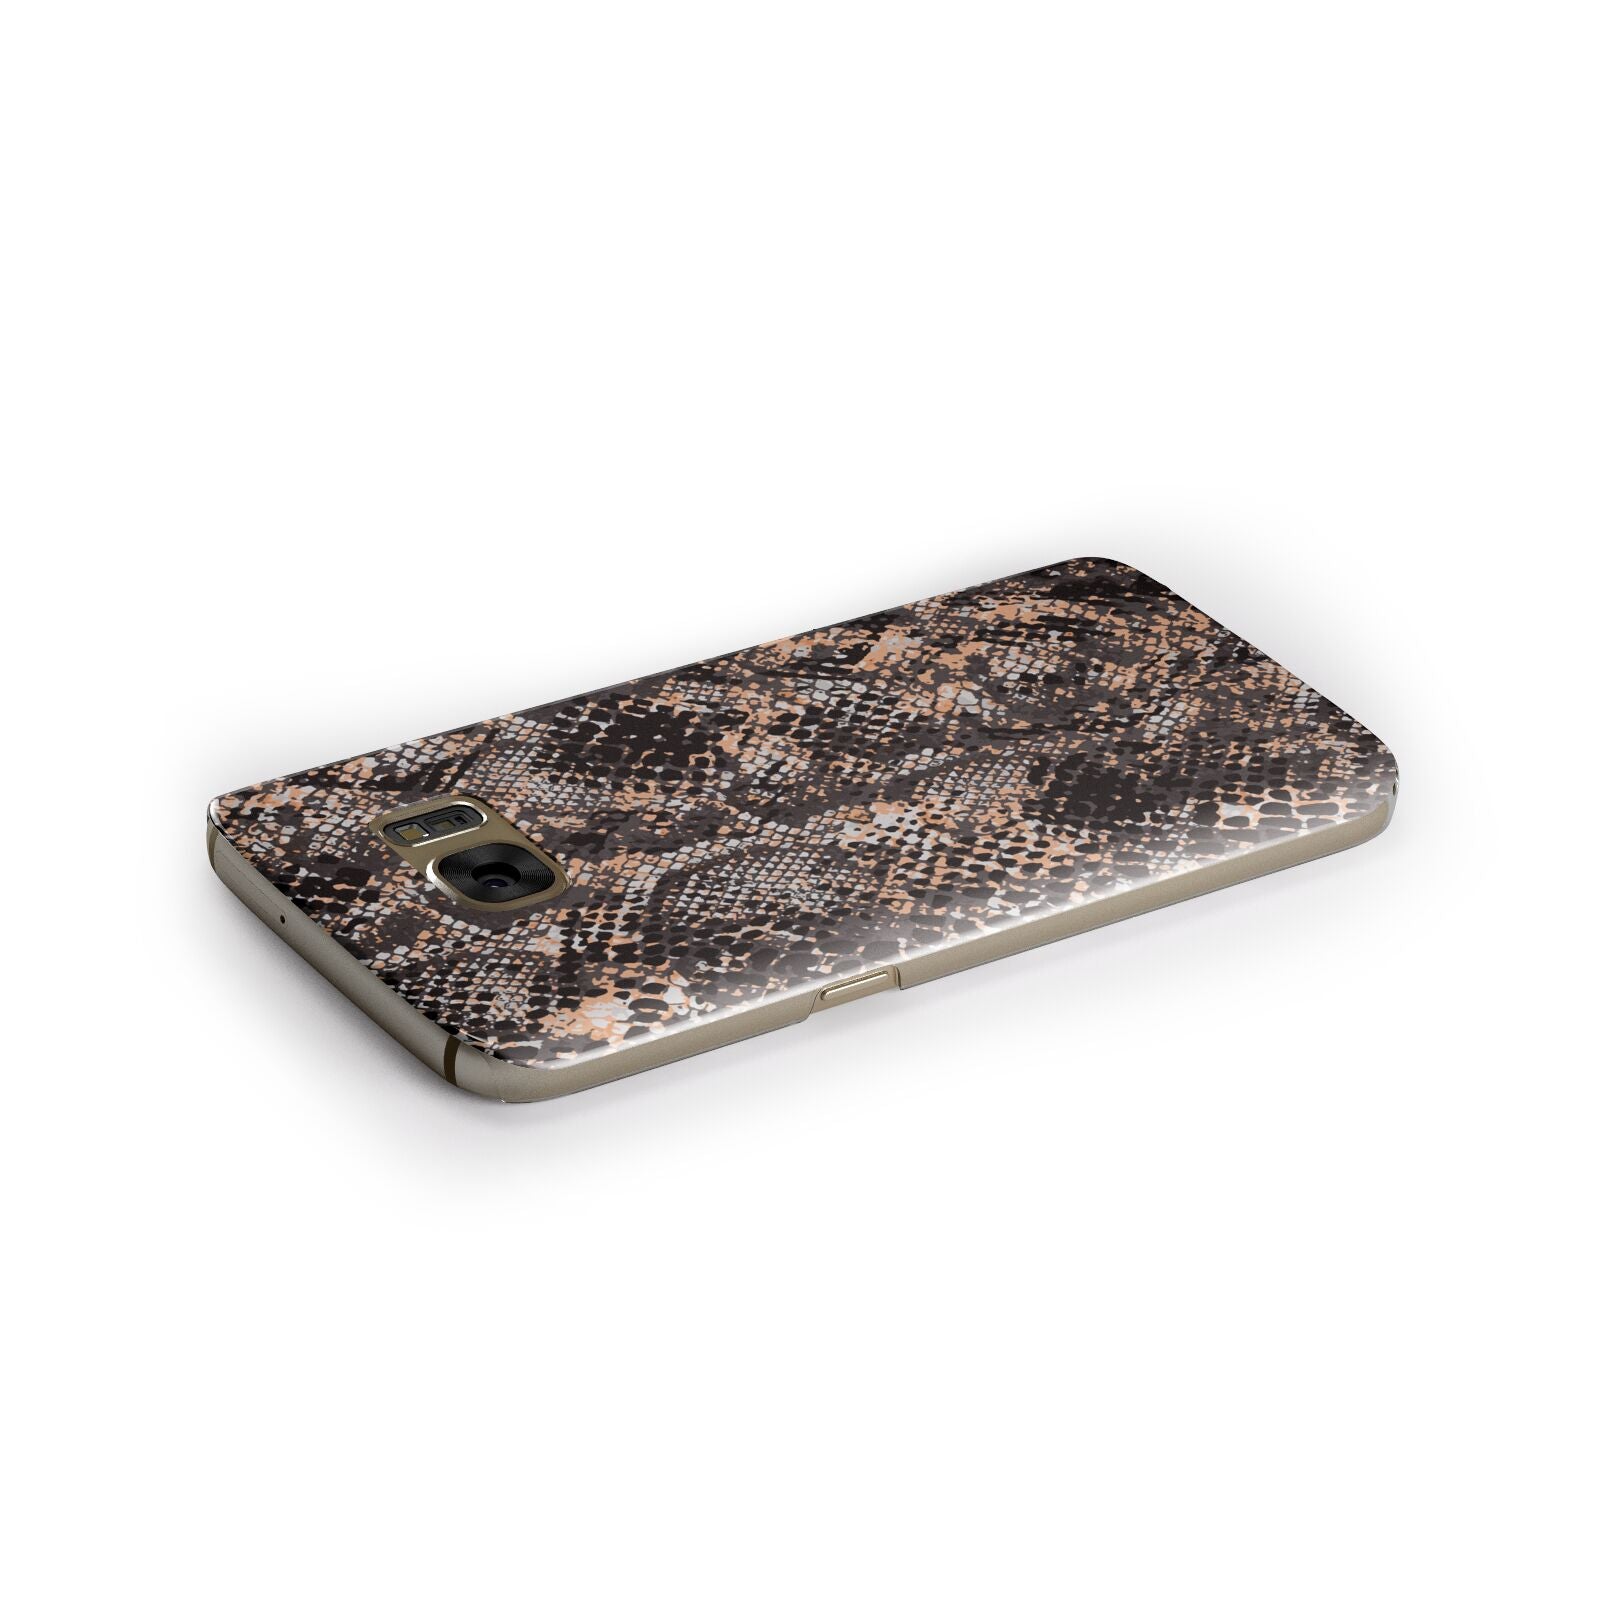 Snakeskin Print Samsung Galaxy Case Side Close Up